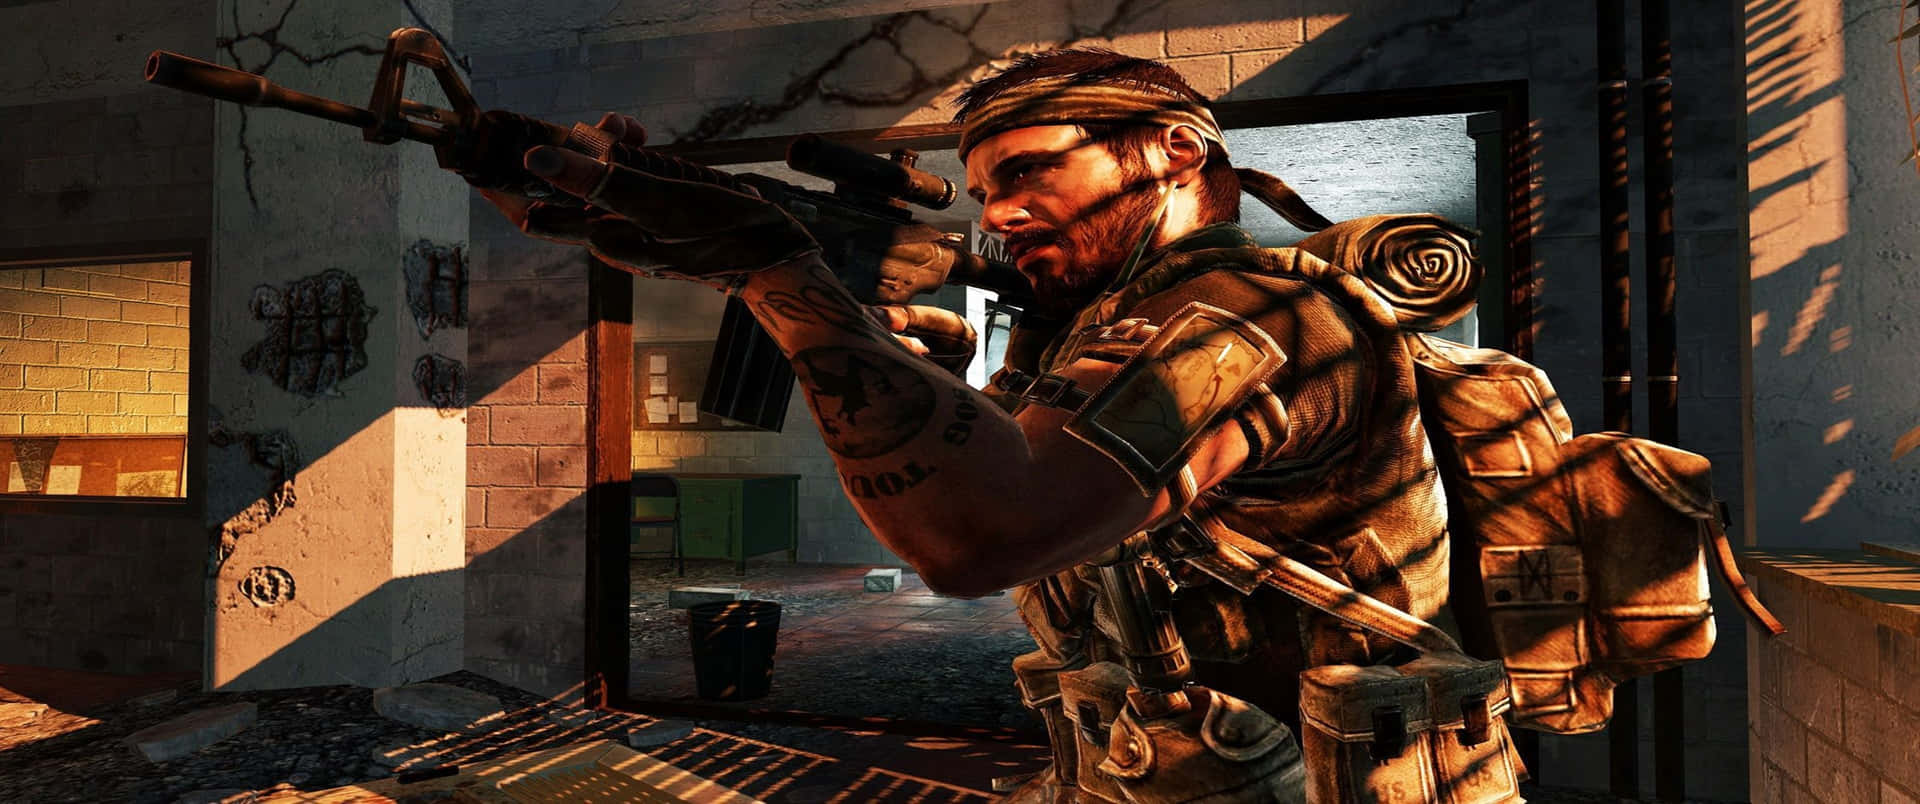 Impressionantesfondo Call Of Duty Black Ops Cold War In 3440x1440p